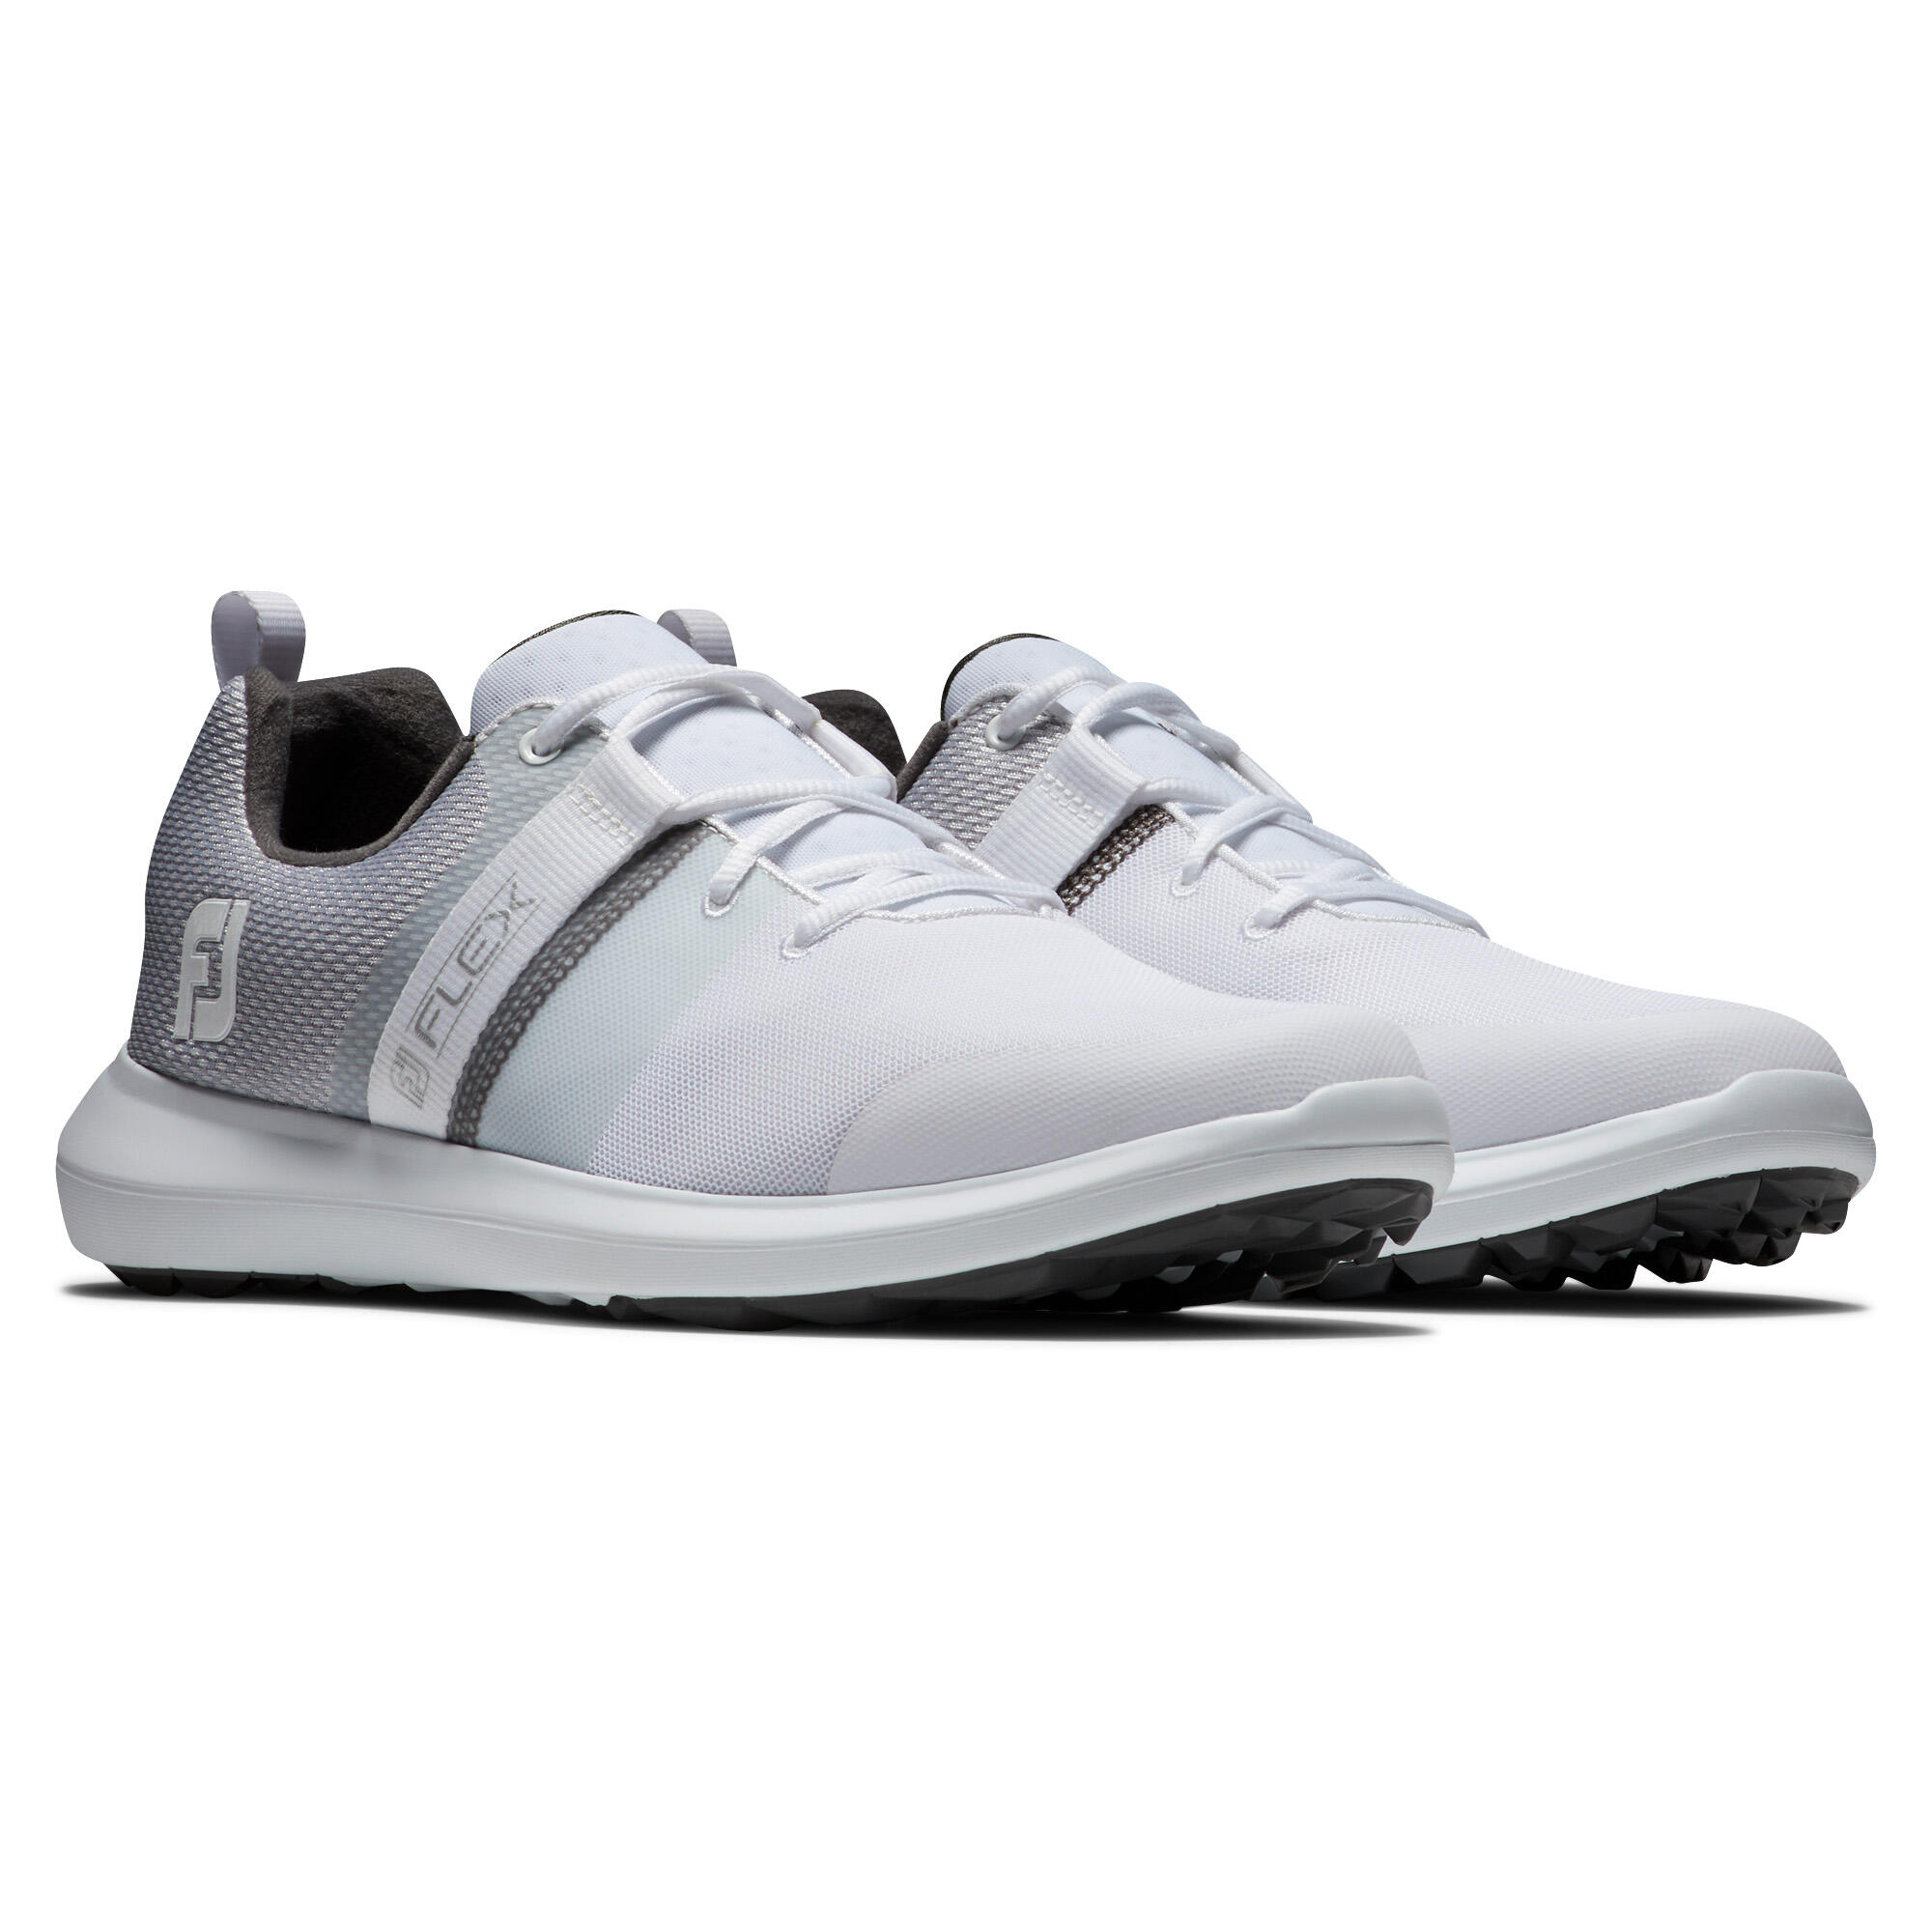 Men’s golf shoes FJ Flex - white and grey 1/6